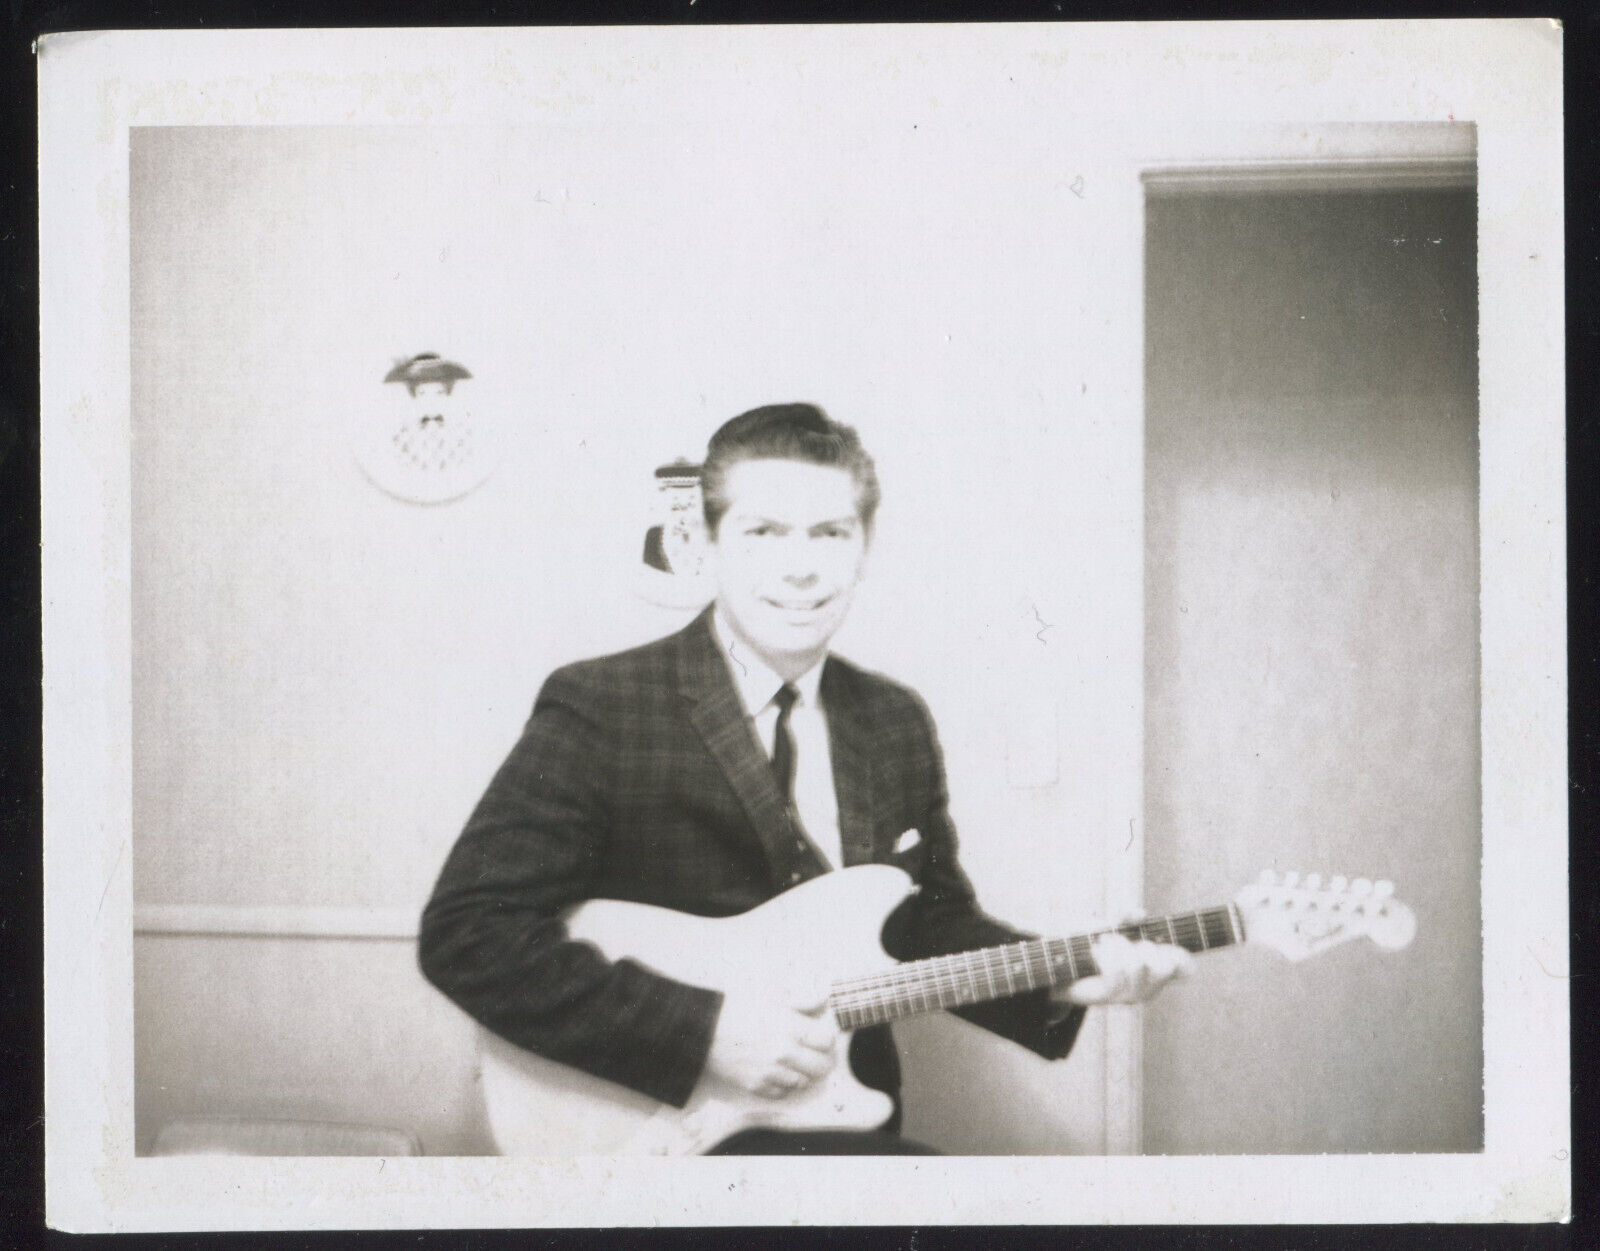 FOUND PHOTO Guitar Player Holding Fender Musicmaster? 1950s B&W Snapshot VTG